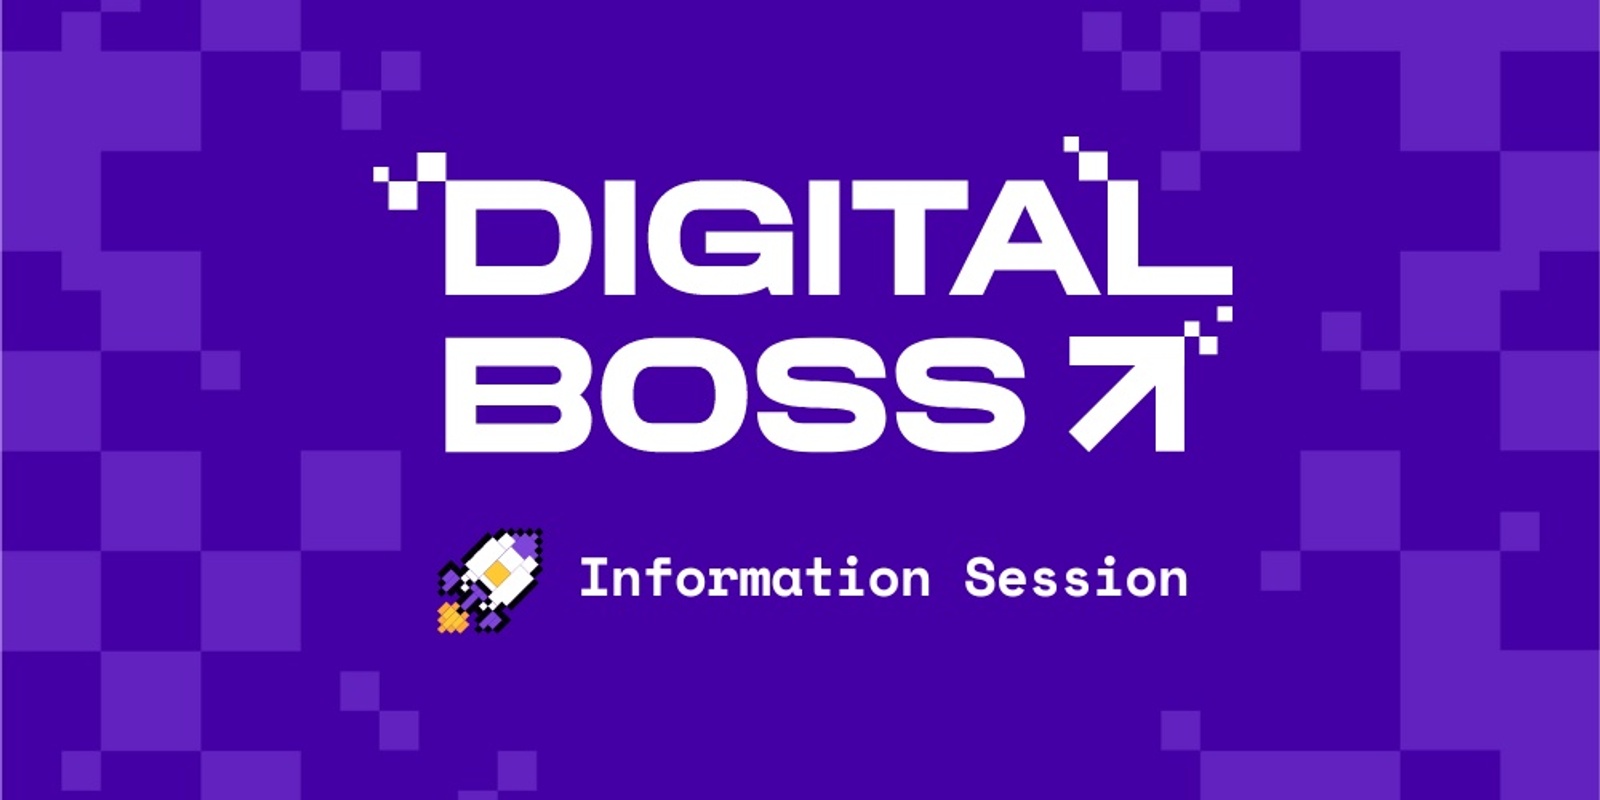 Banner image for Digital Boss Information Session